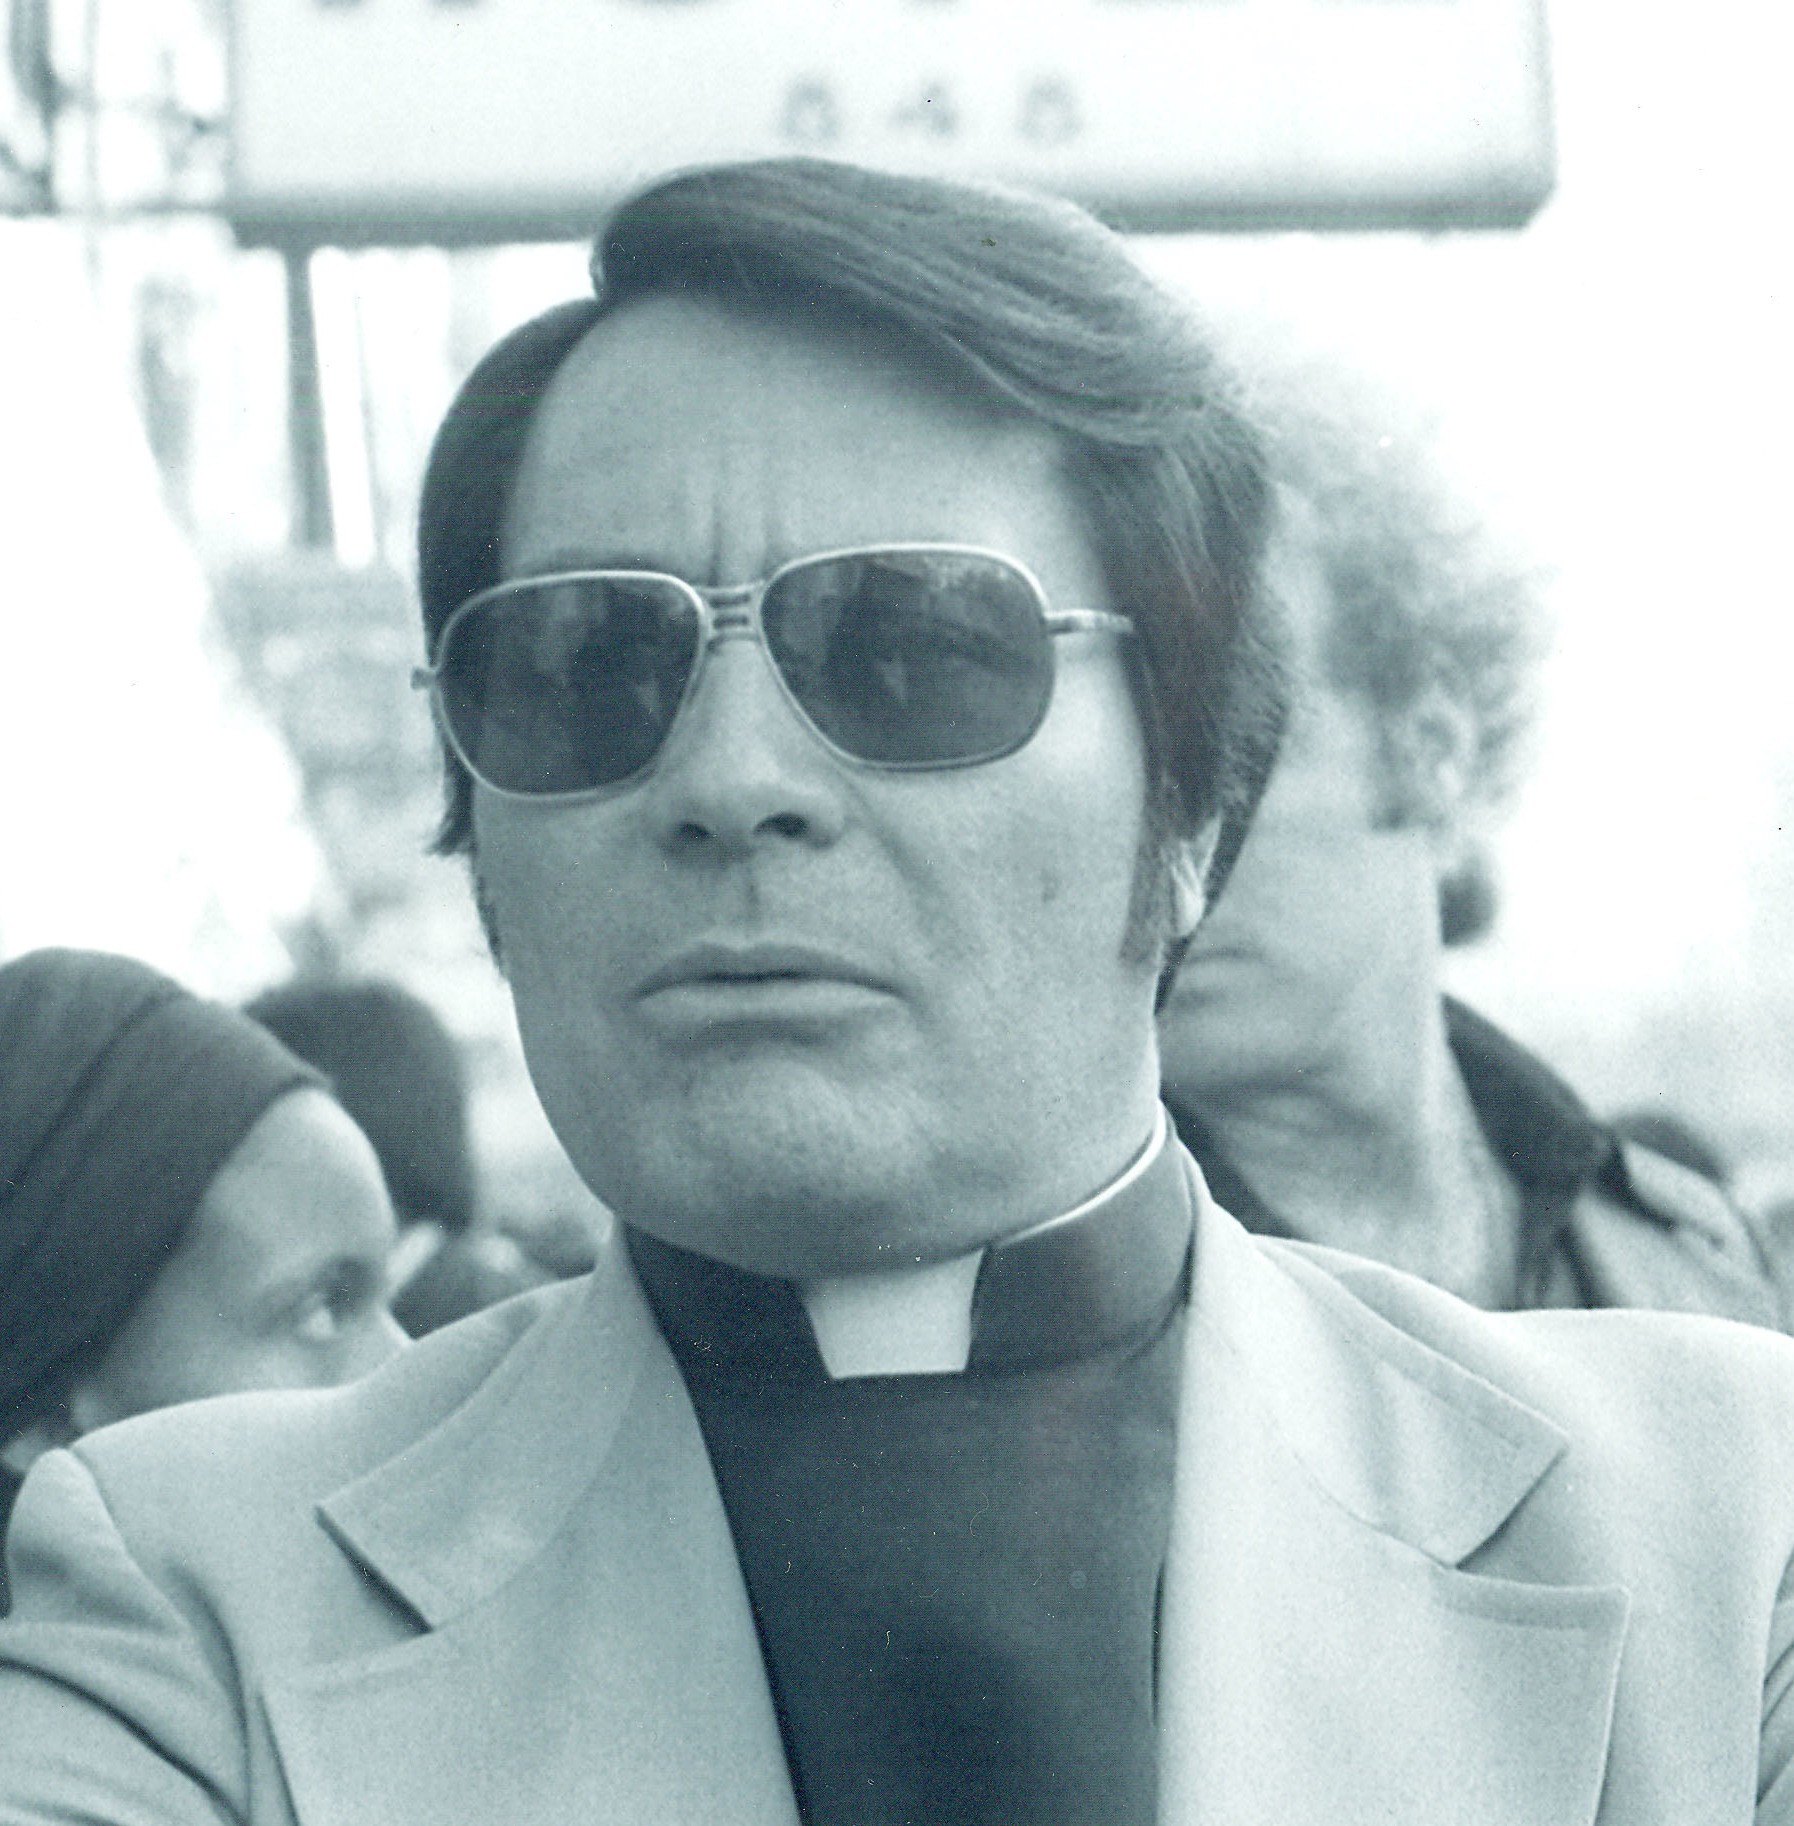 People’s Temple cult leader, Jim Jones, in sunglasses and priest’s collar.